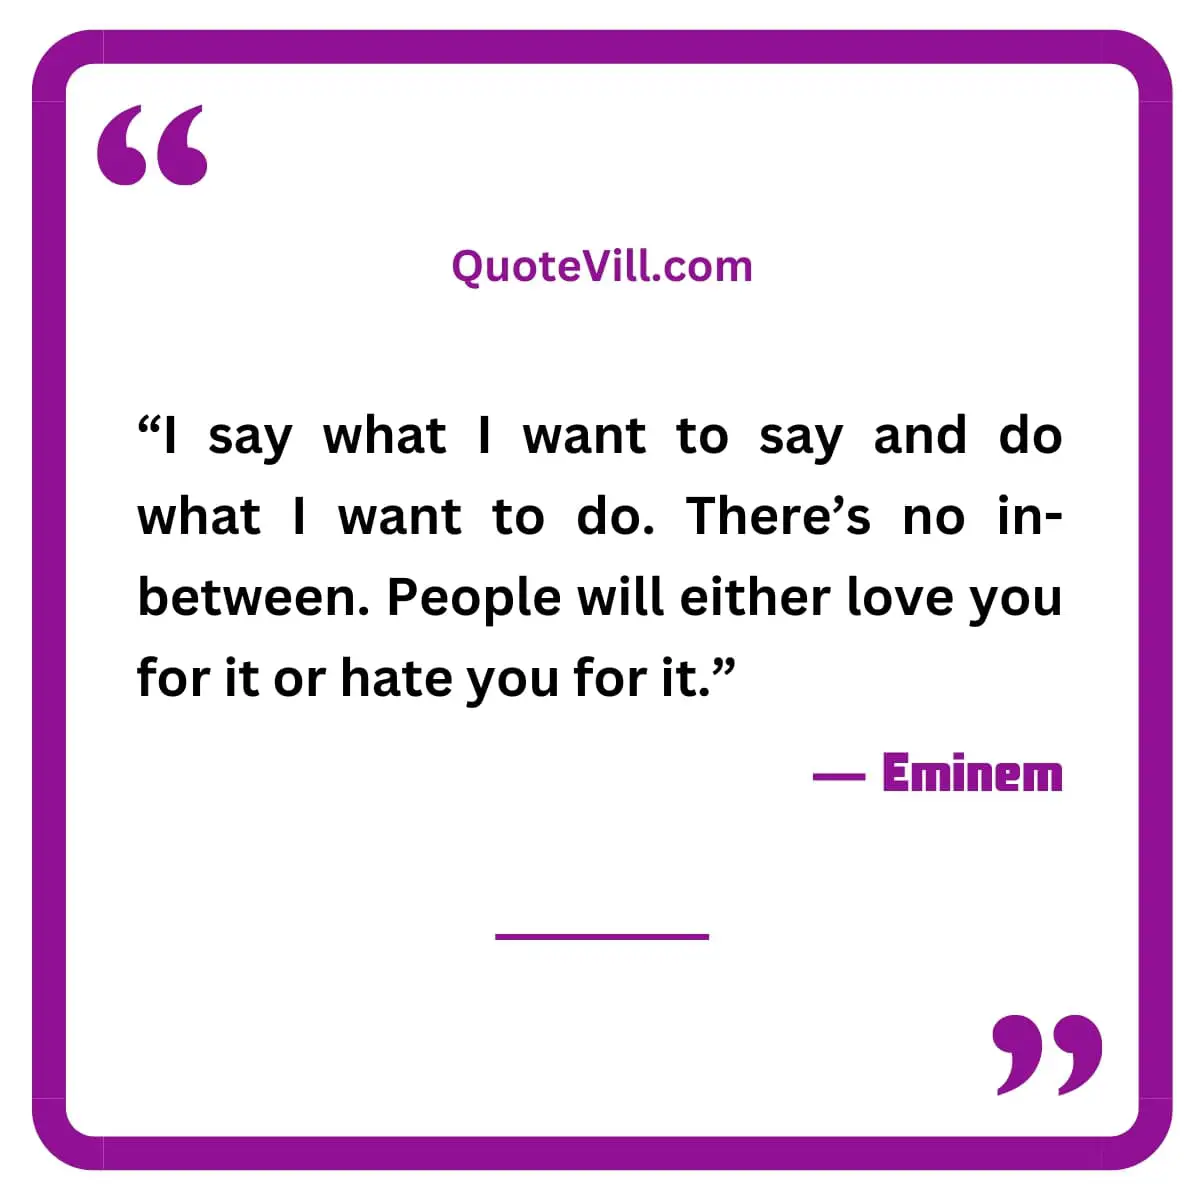 Eminem Quotes on Love